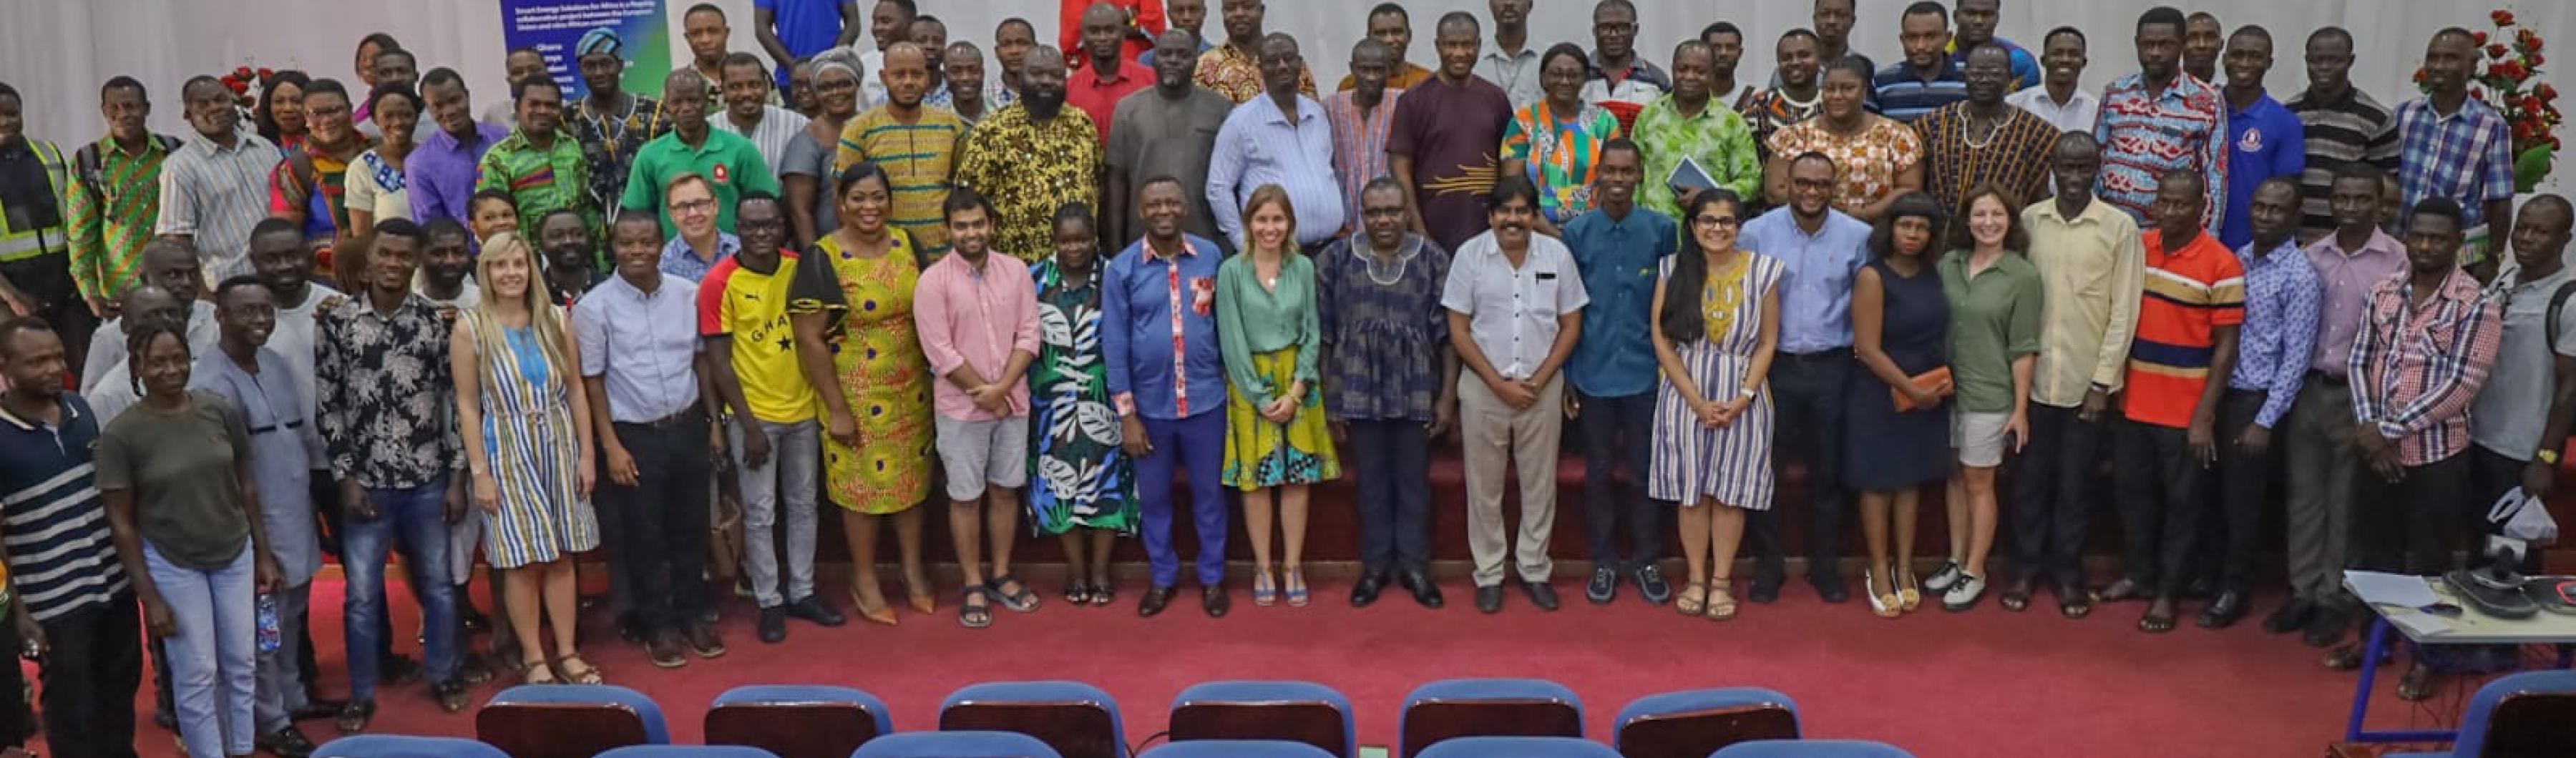 foto bersama para peserta dalam pertukaran peer-to-peer di Ghana